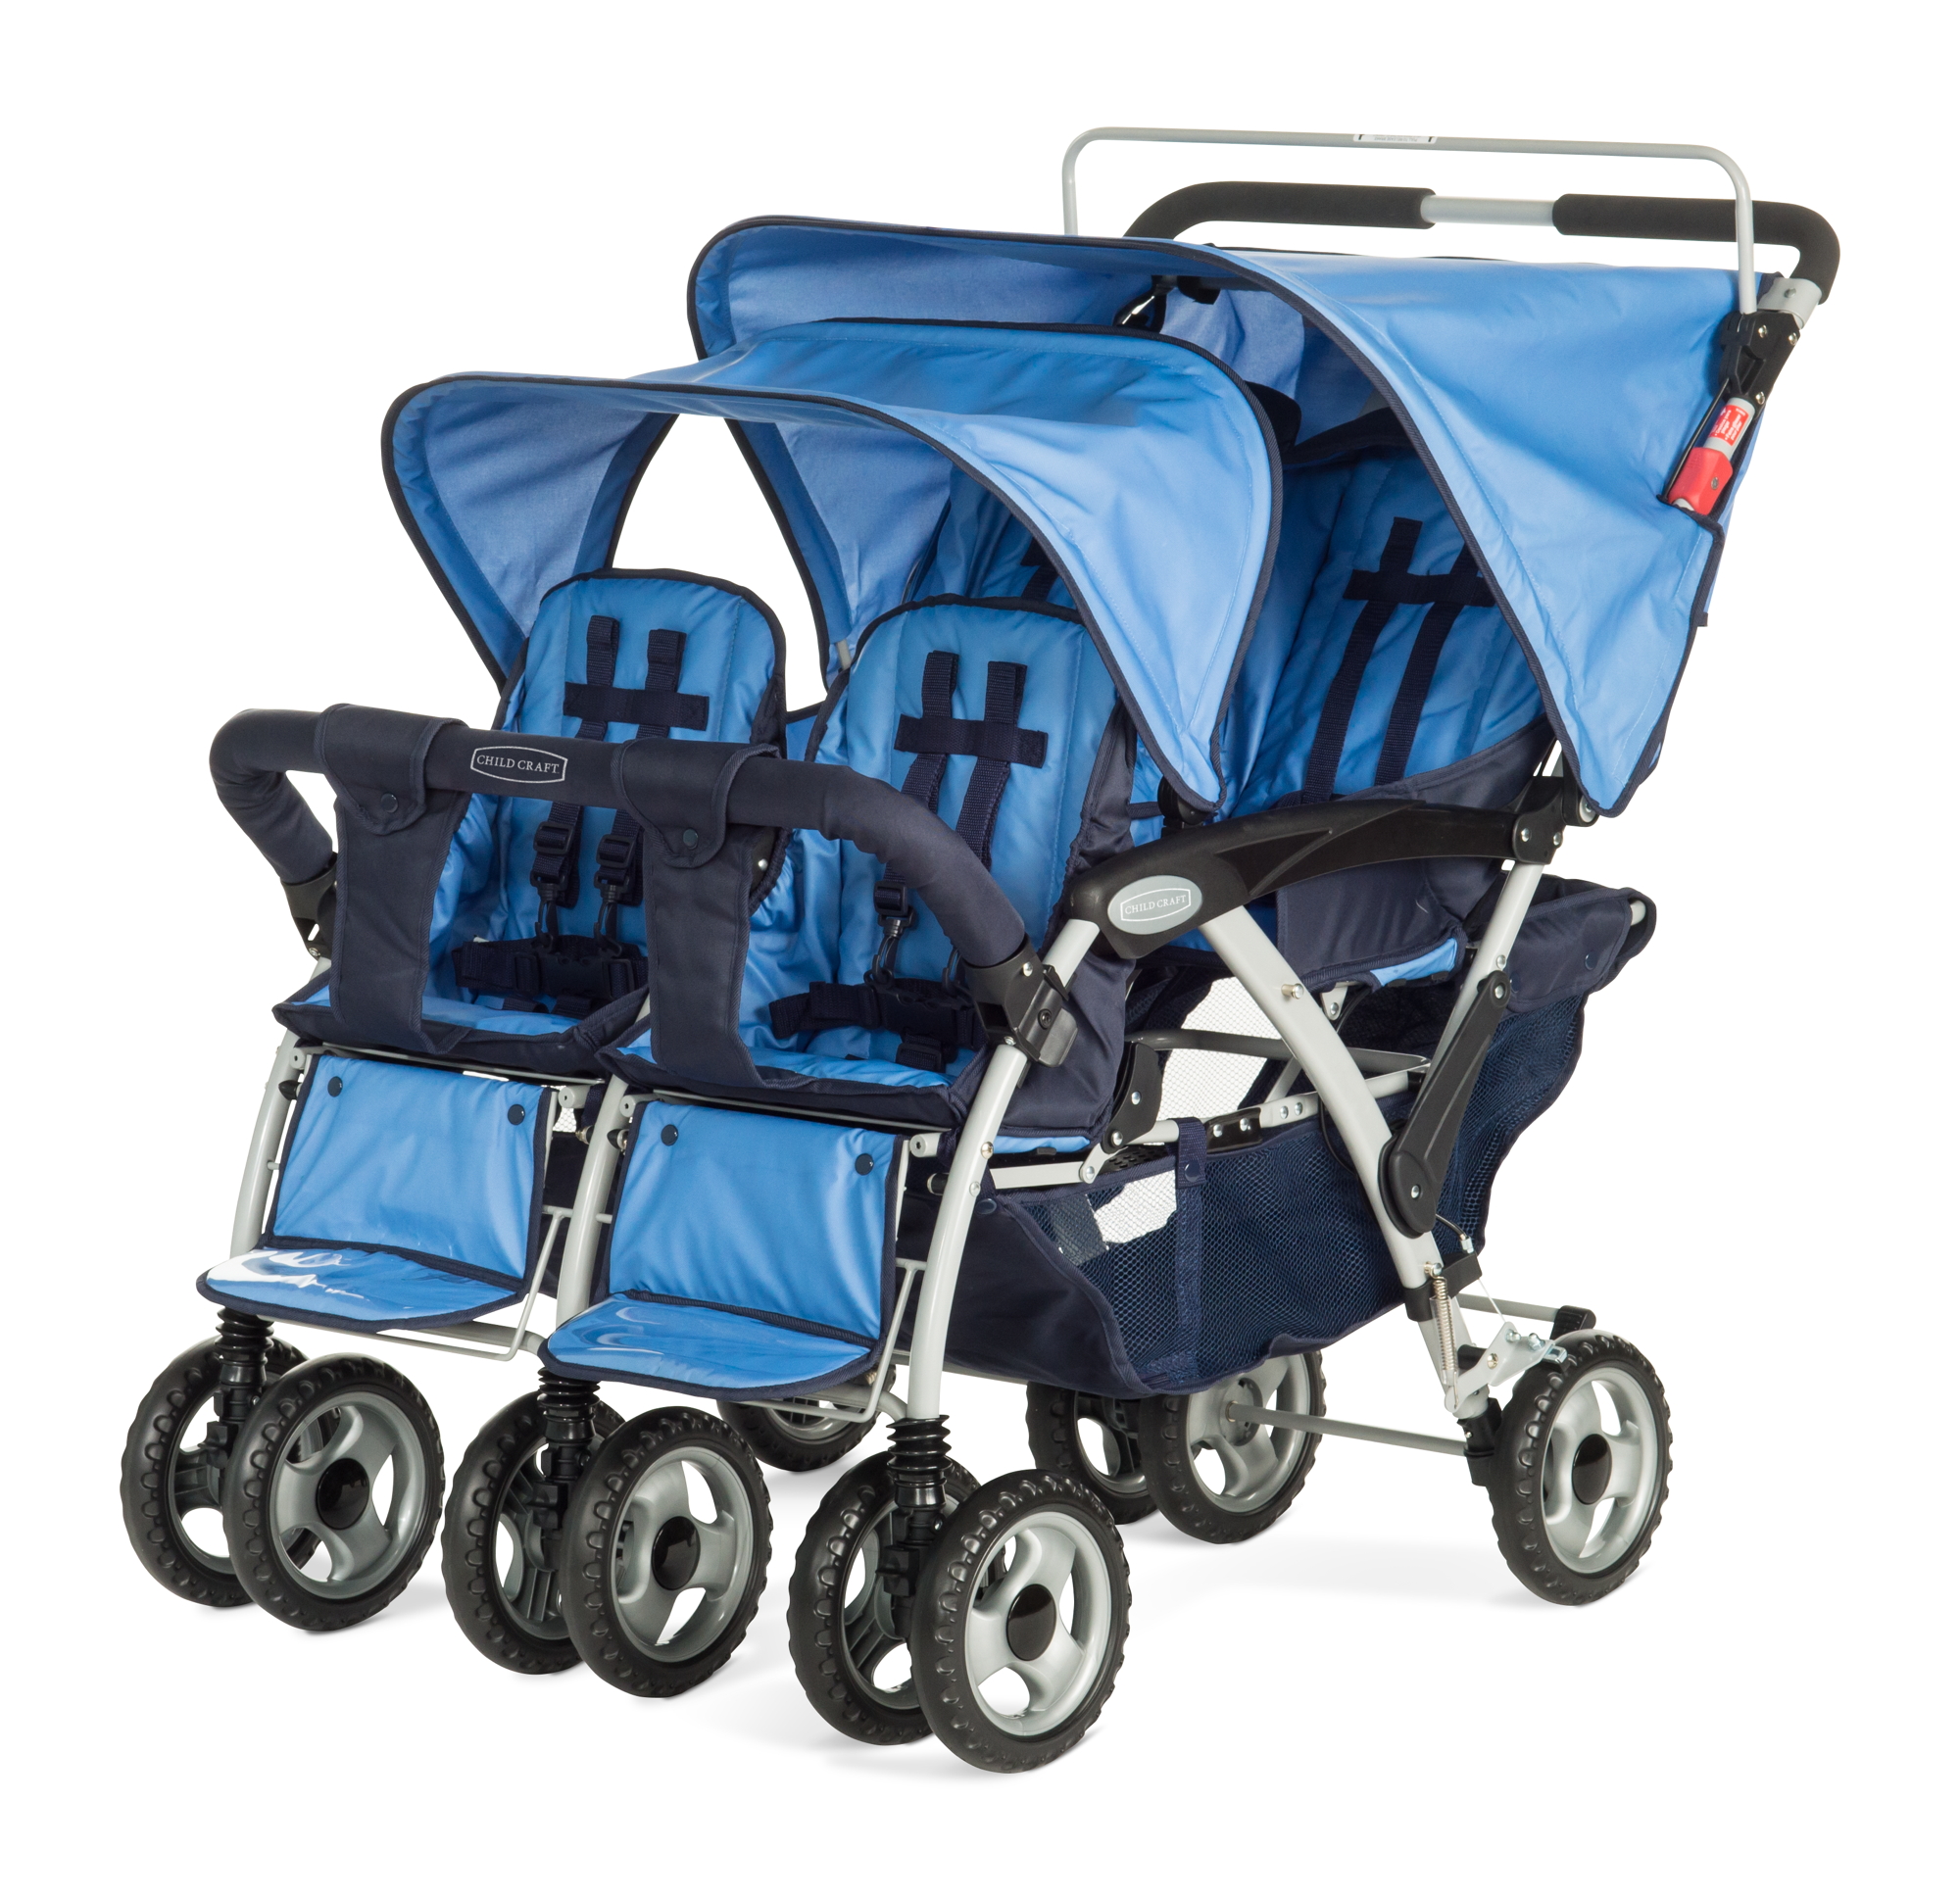 Child Craft Sport Quad Stroller Blue
